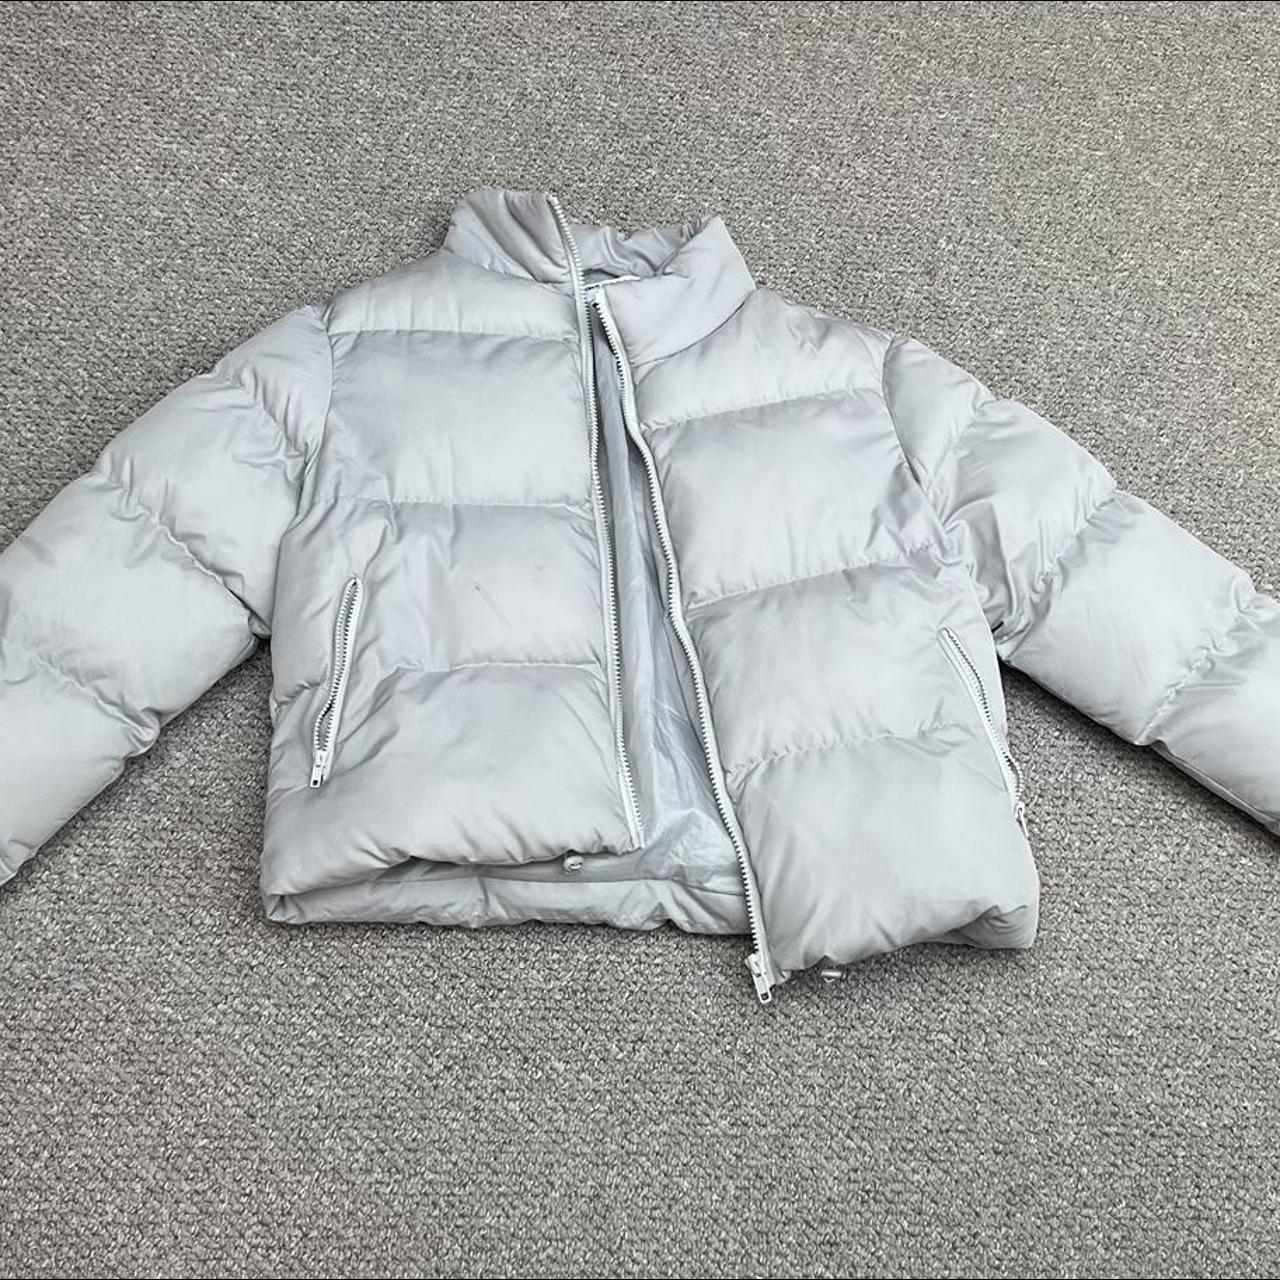 ASOS grey puffer jacket medium - Depop